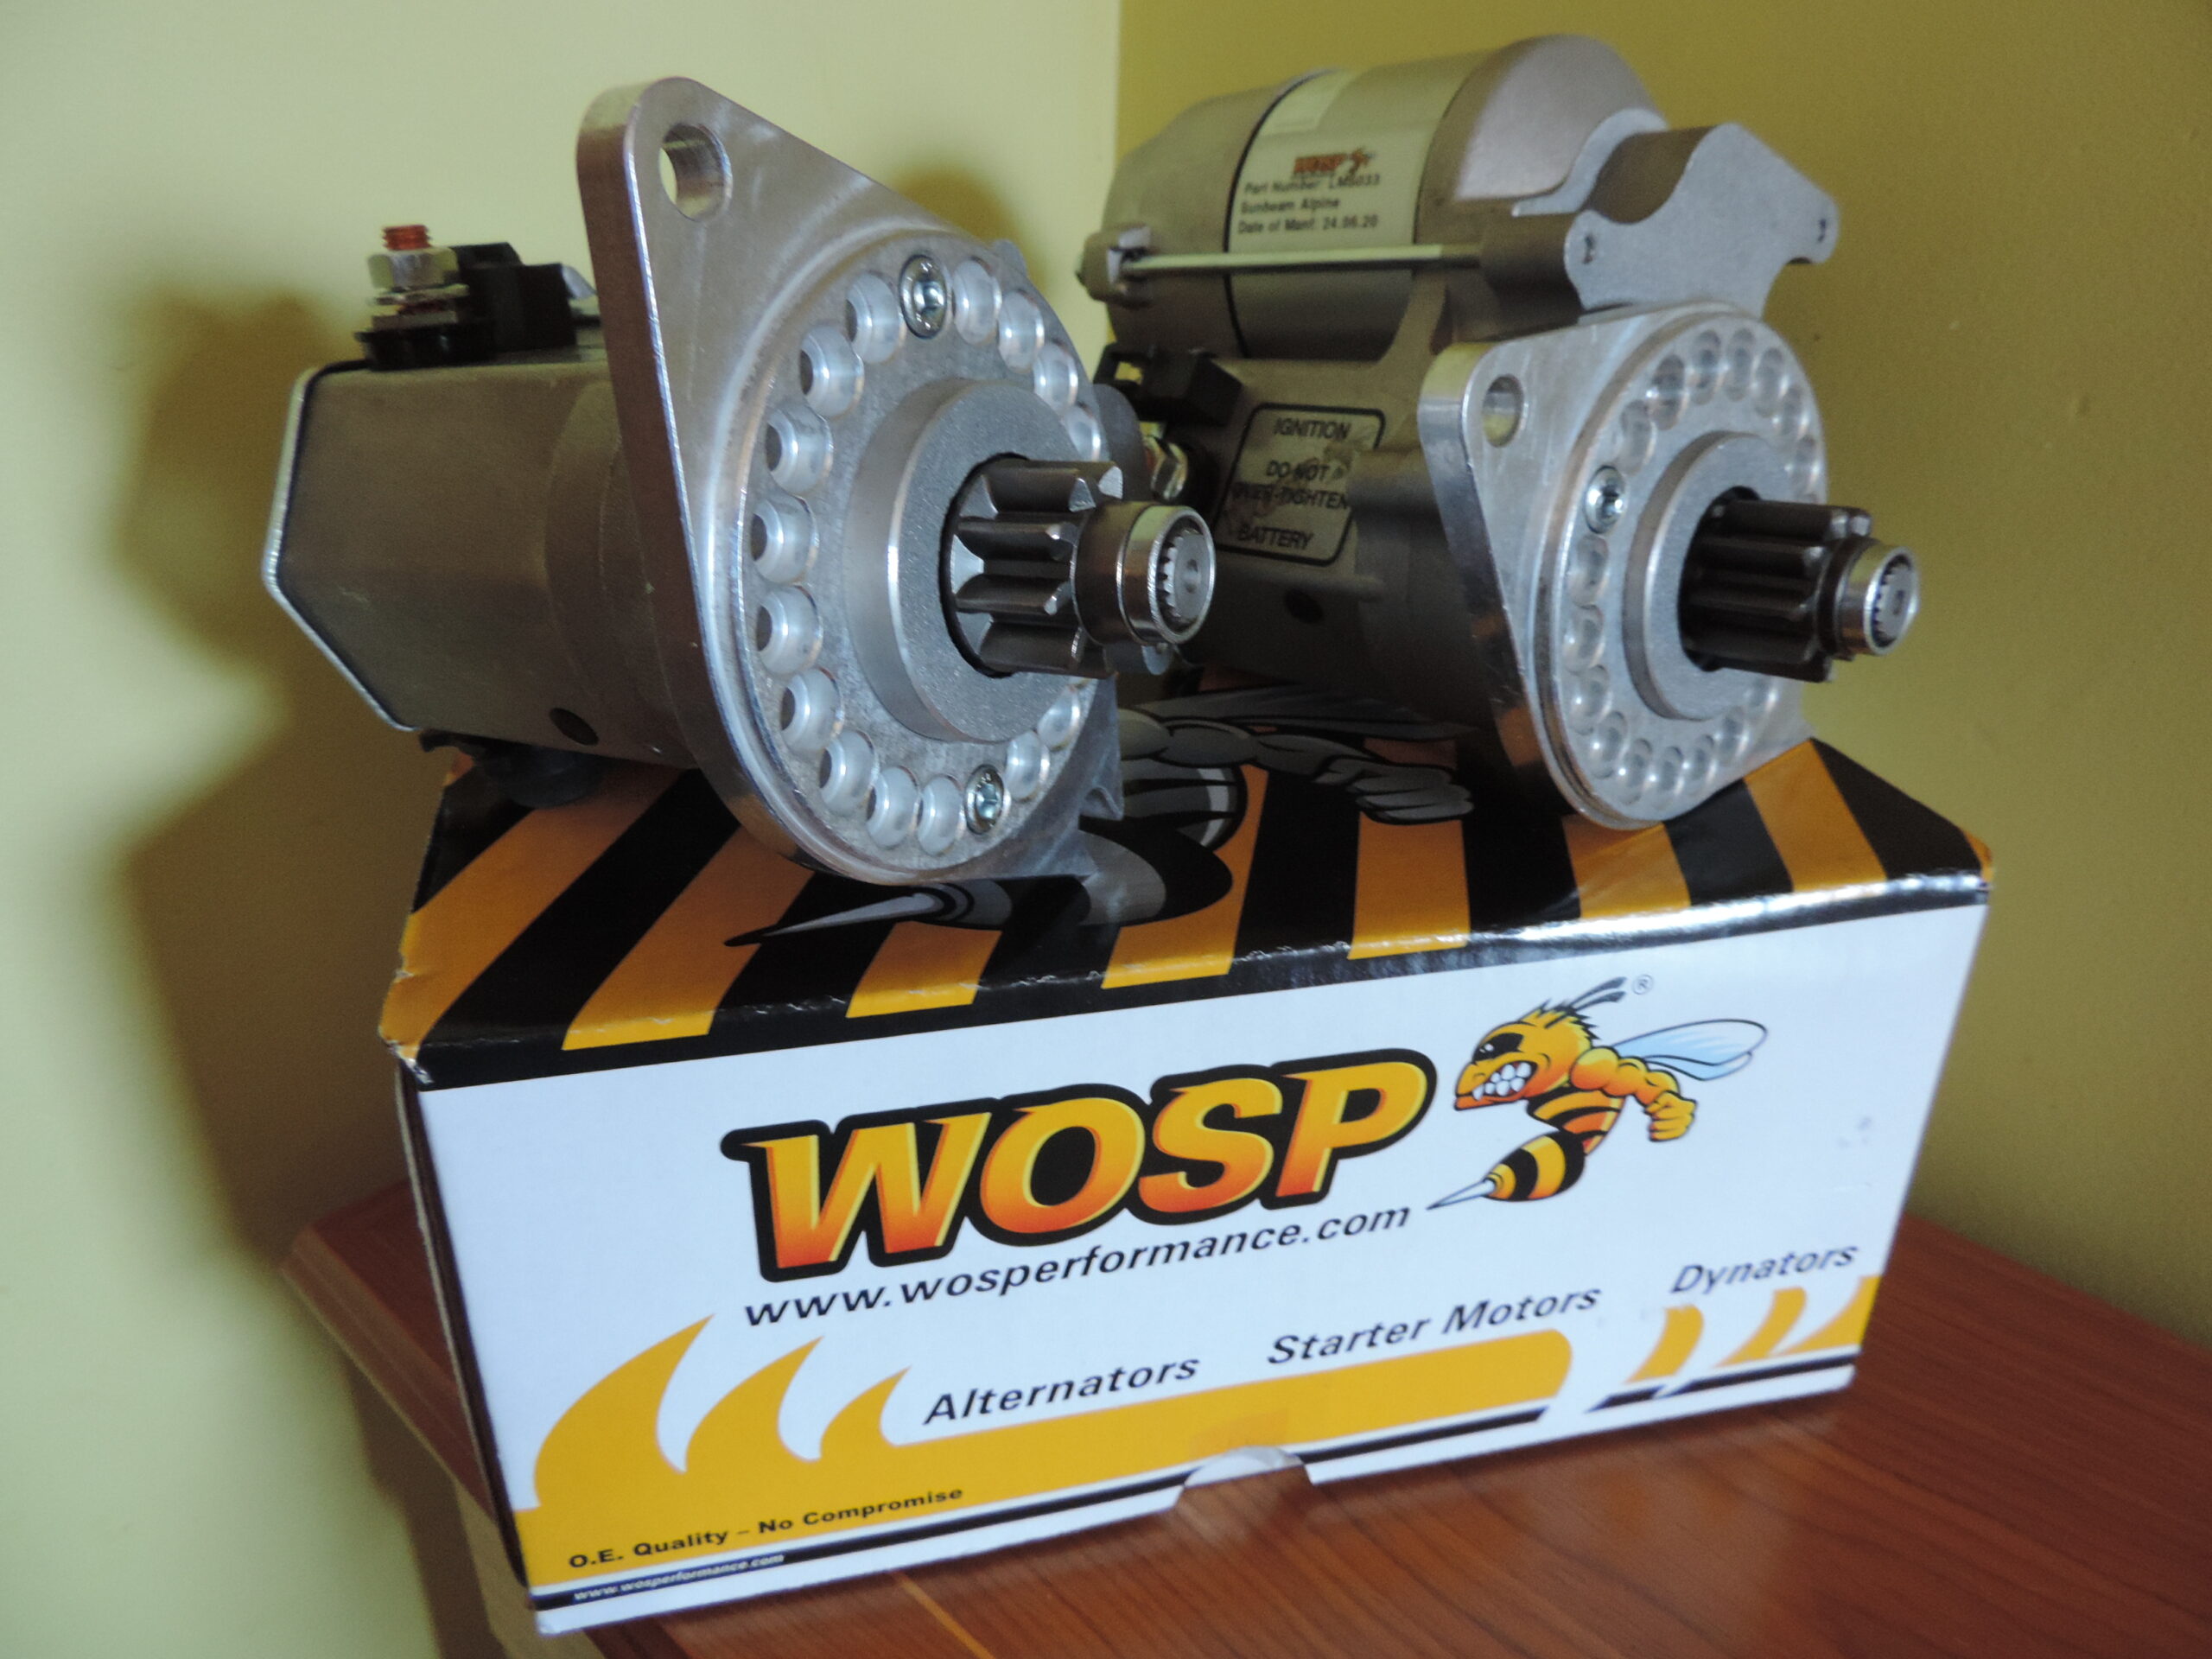 WOSP Starter Motors, Alternators, Dynators